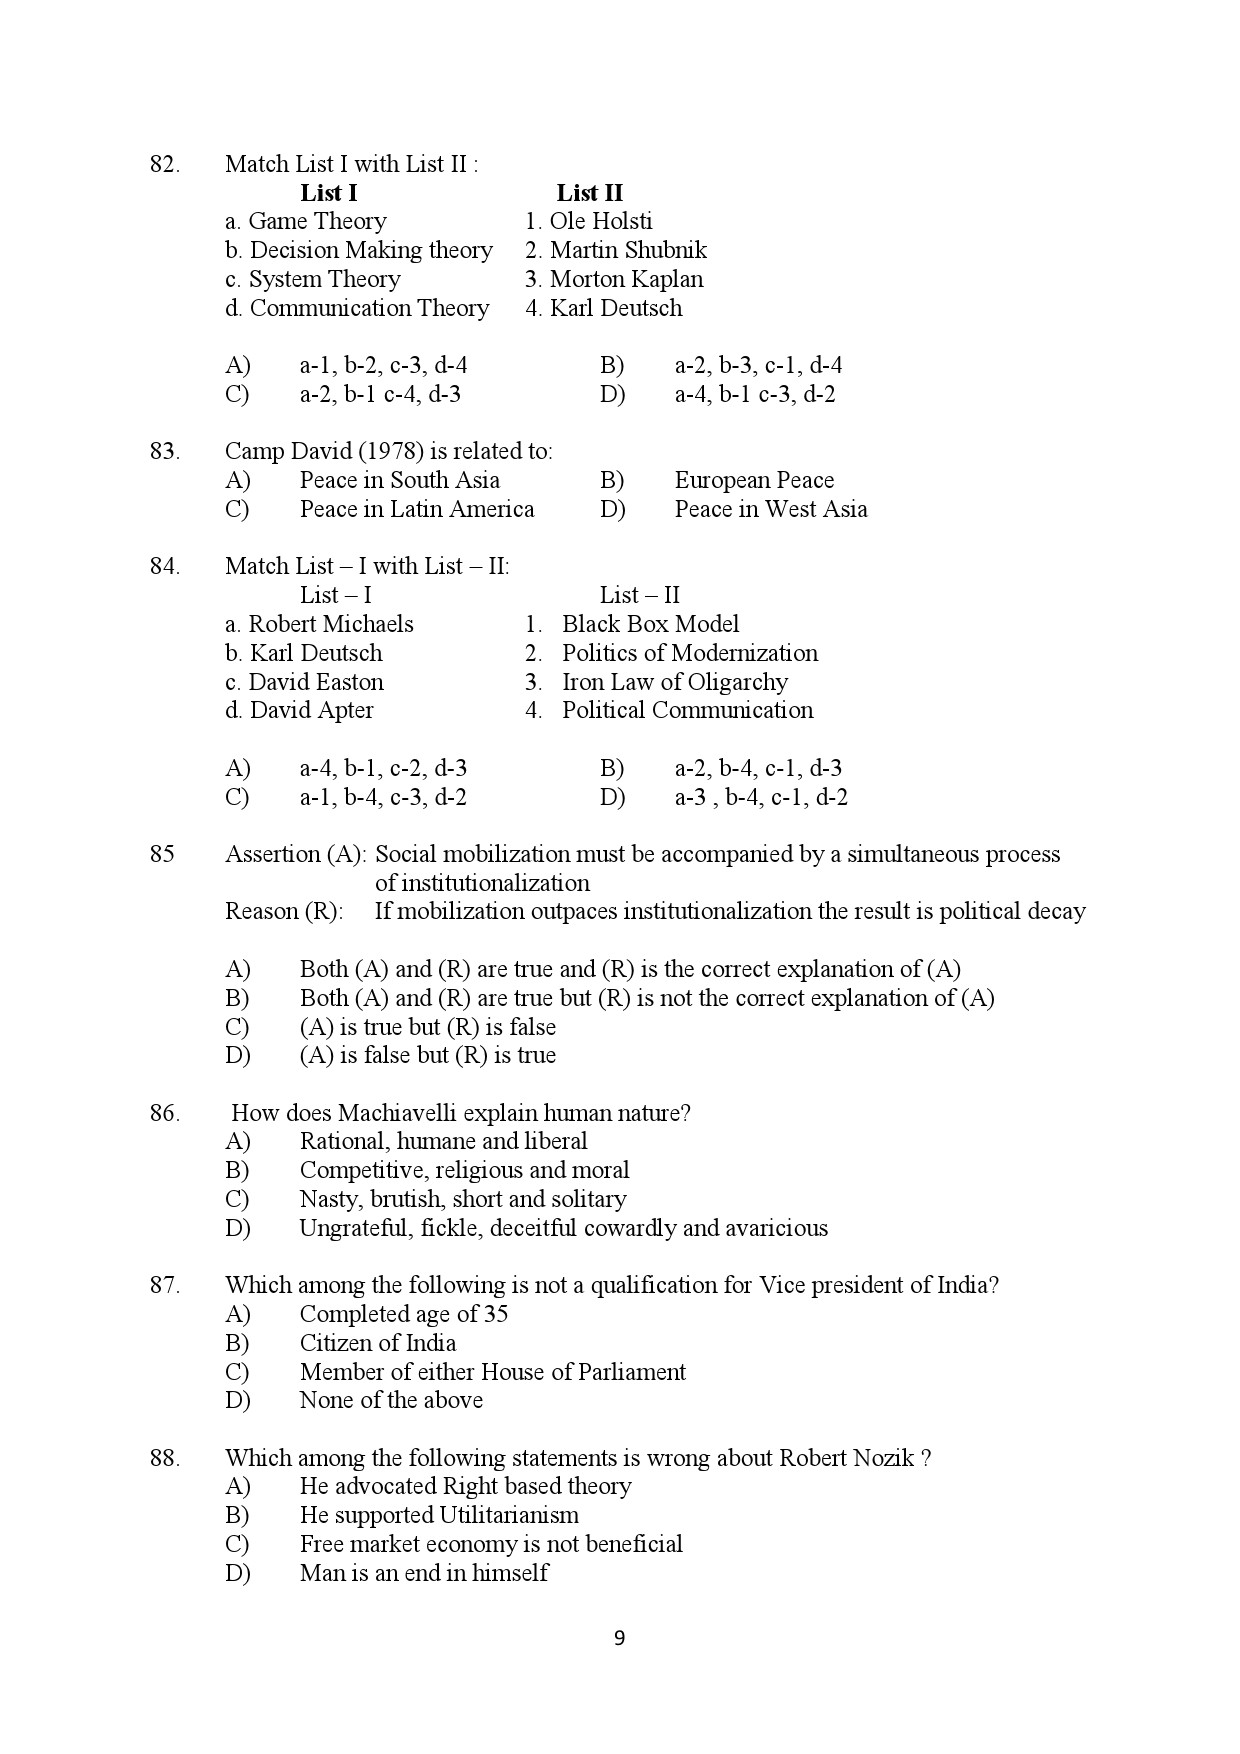 Kerala SET Political Science Exam Question Paper February 2020 9